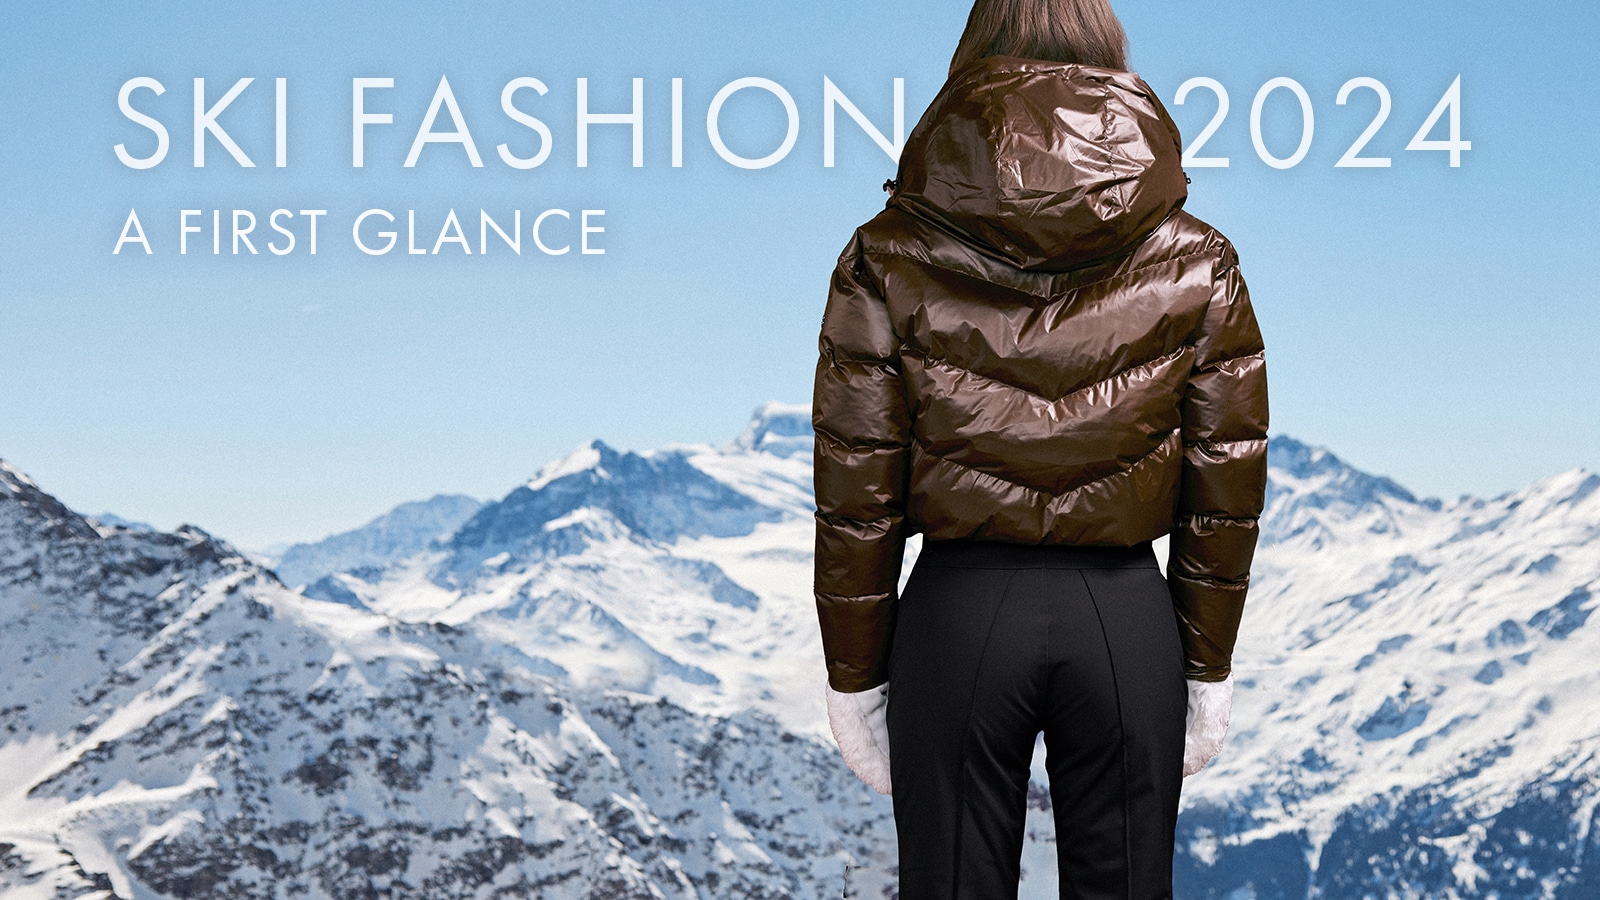 Introducing Ski Fashion 2024: A First Glance